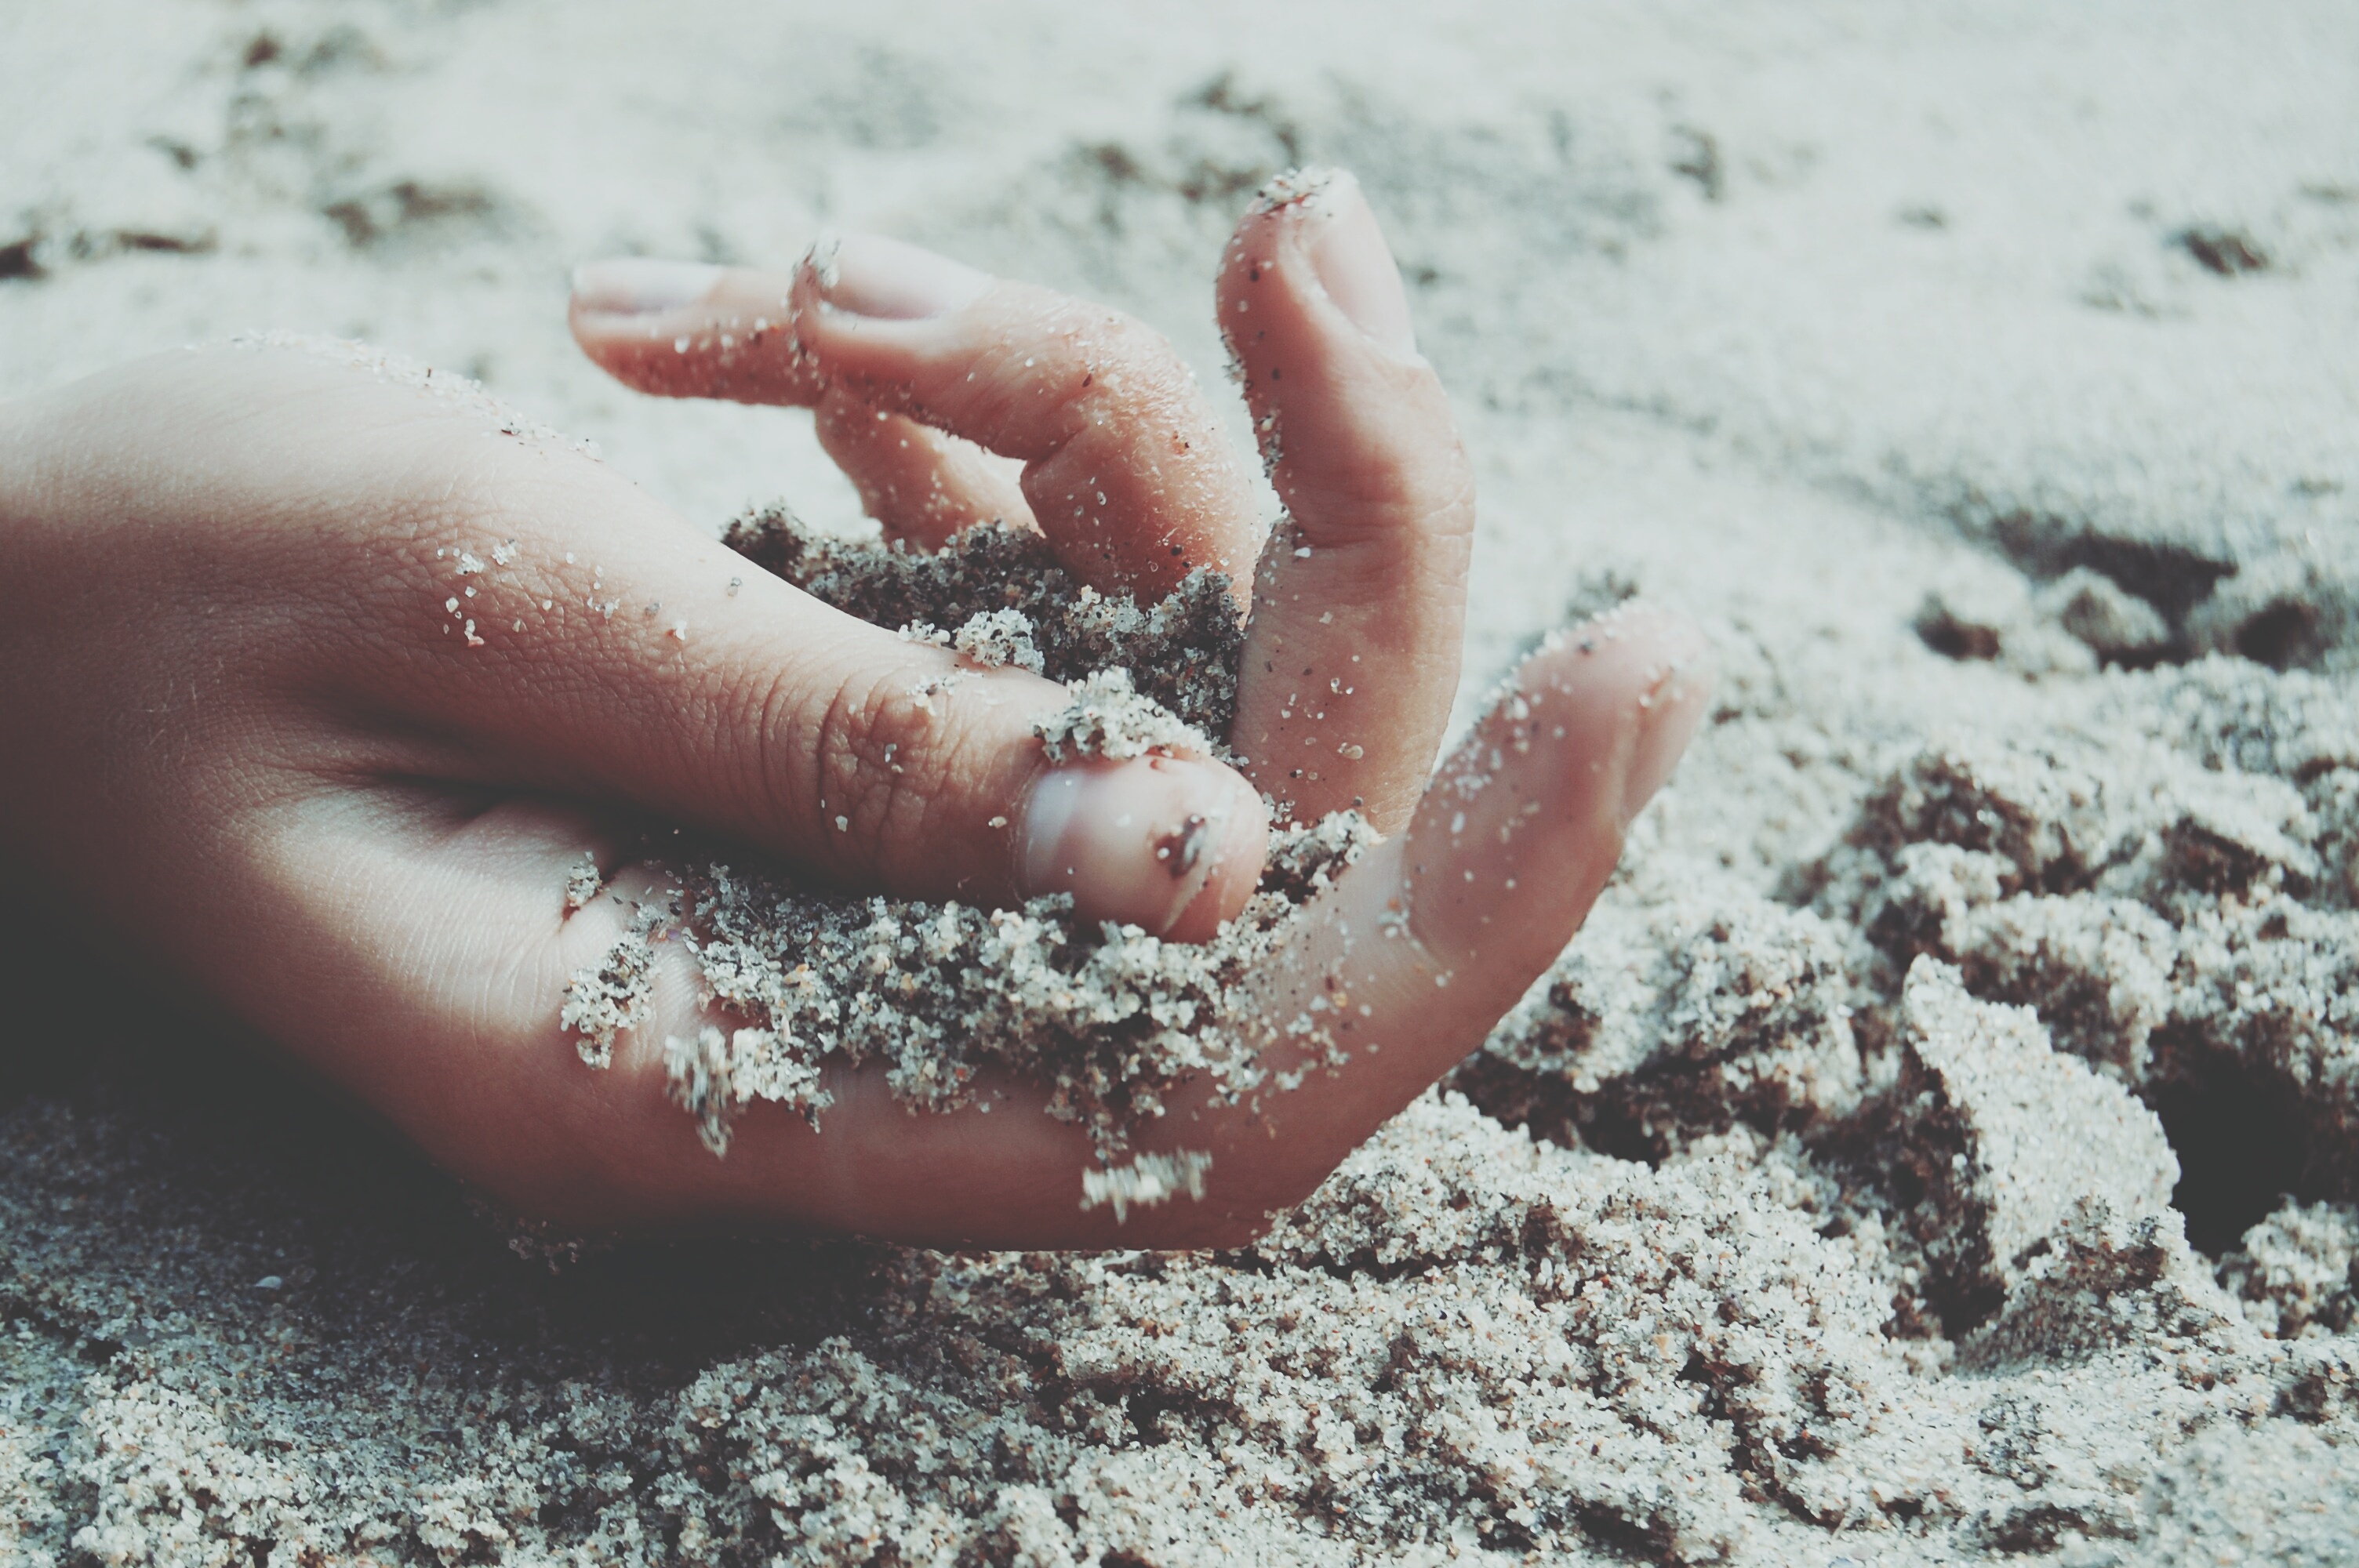 Sand In Hand, Activity, Beach, Hand, Human, HQ Photo